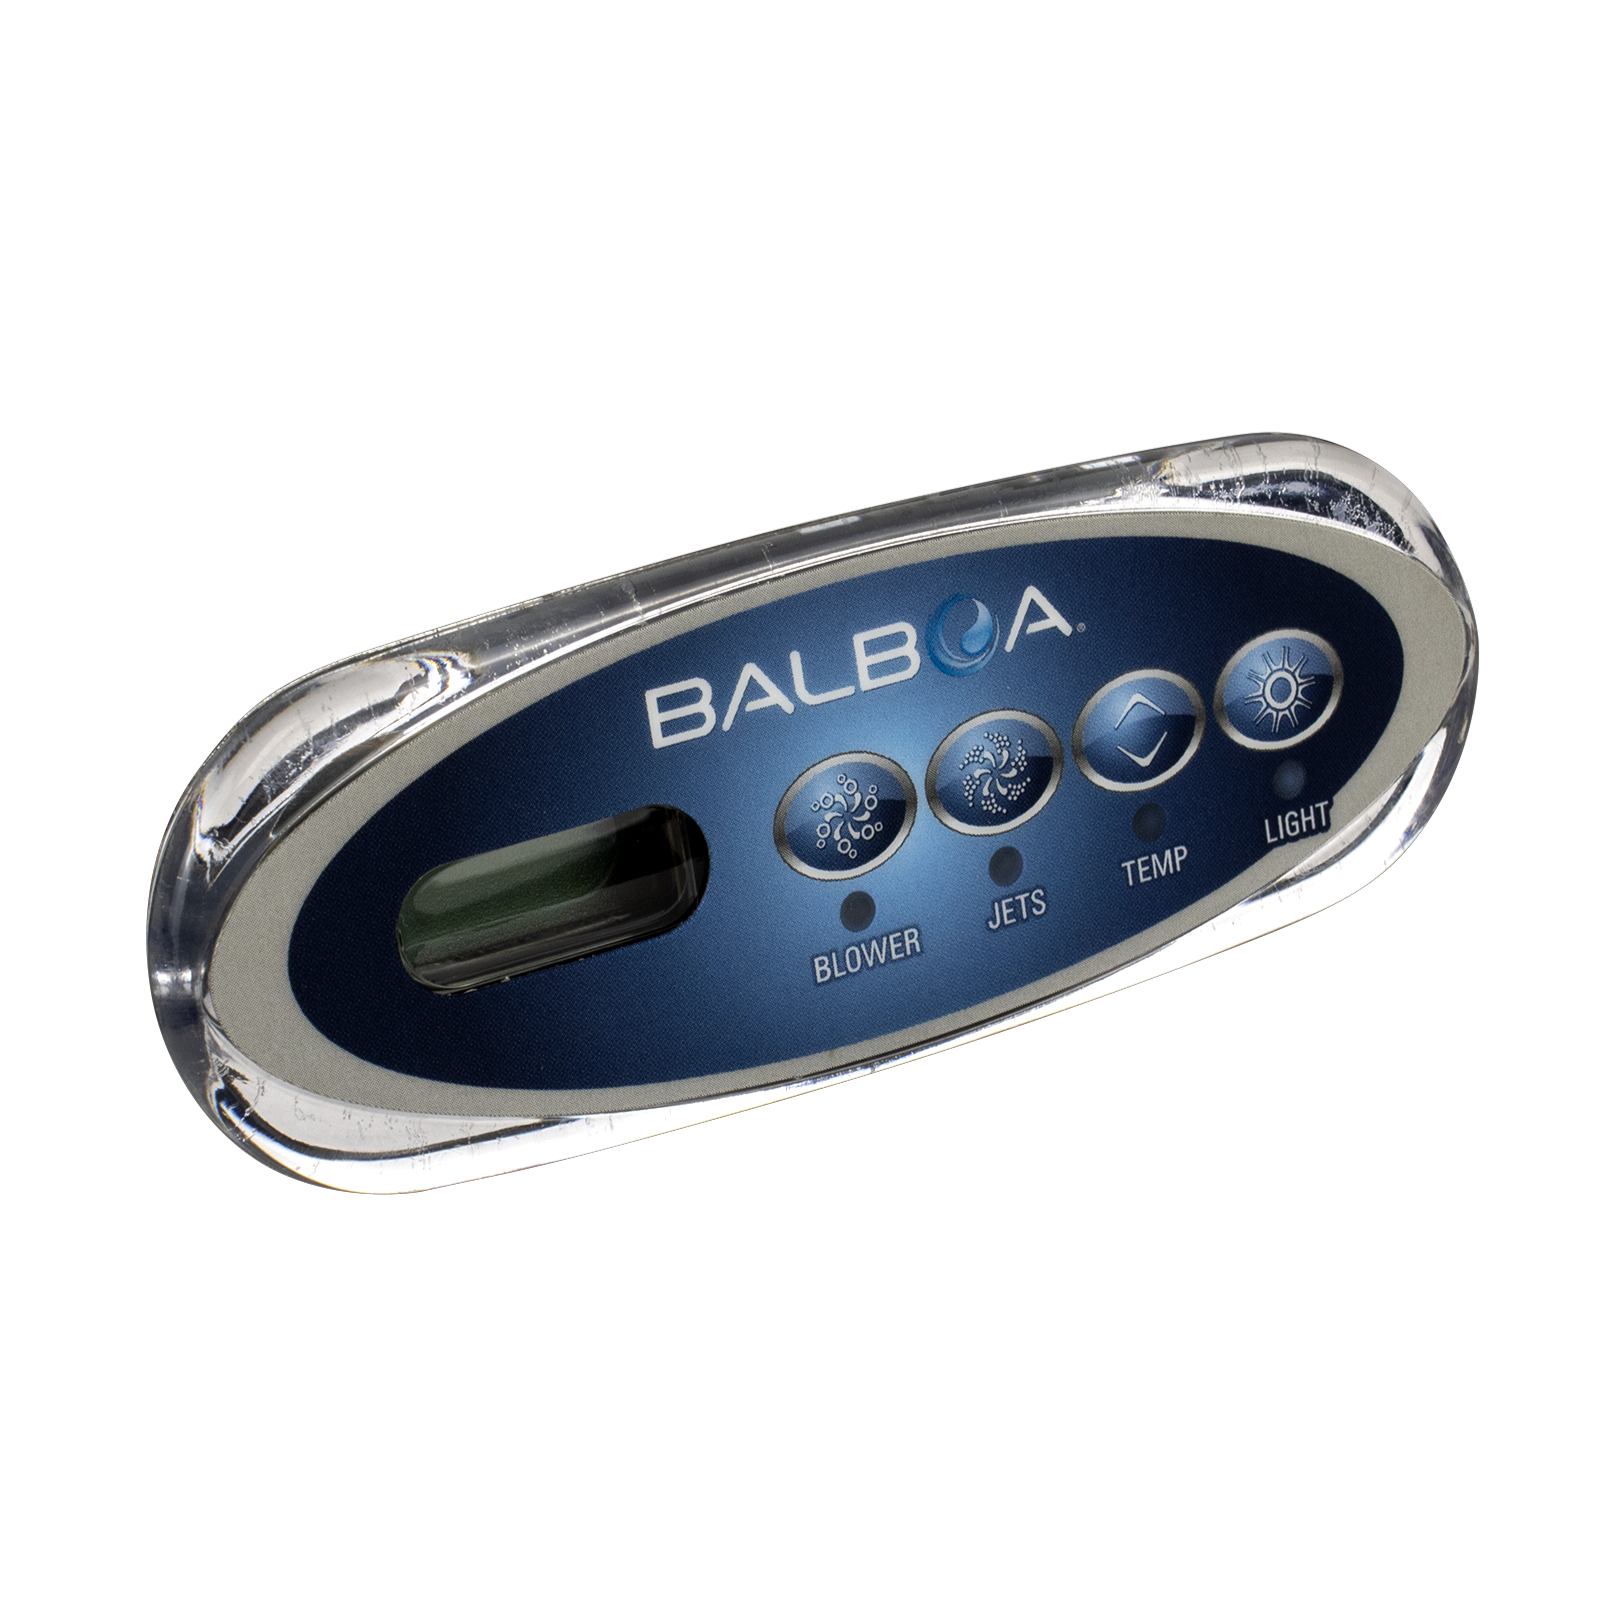 Balboa VL200 min-oval LCD Light Duplex Jets 4-button Panel